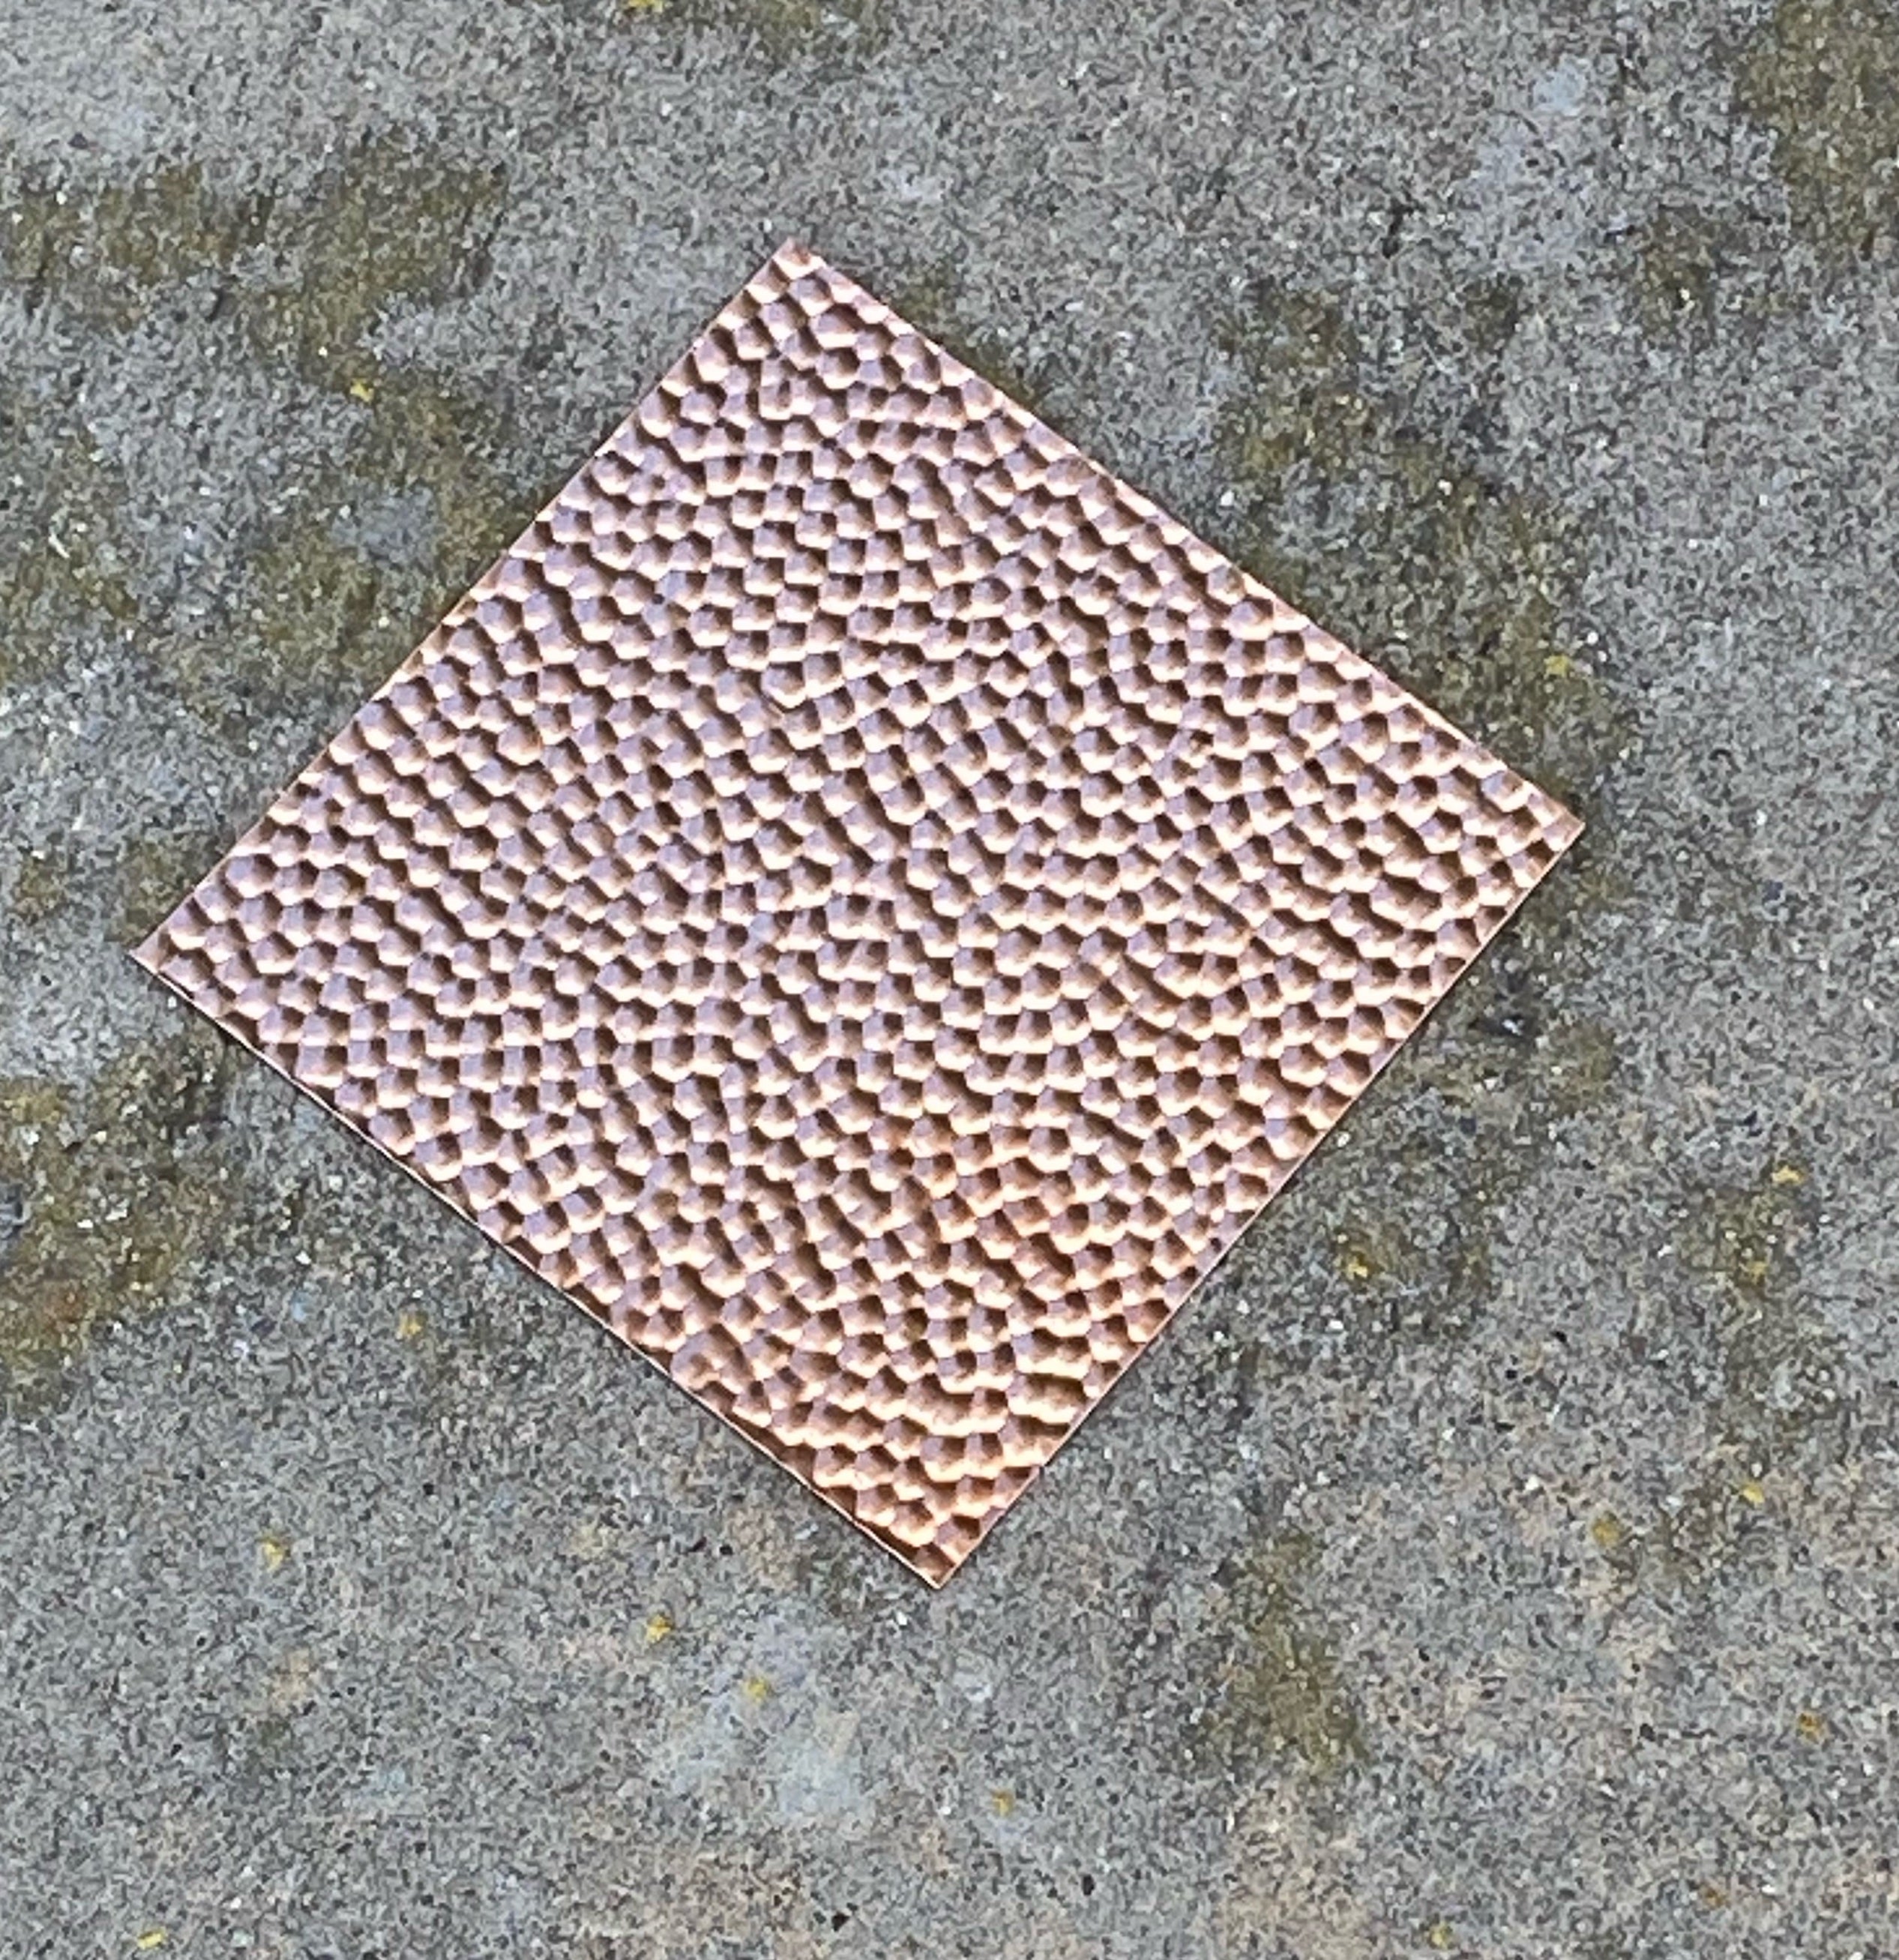 Copper Sheet Metal 6 x 6 Square